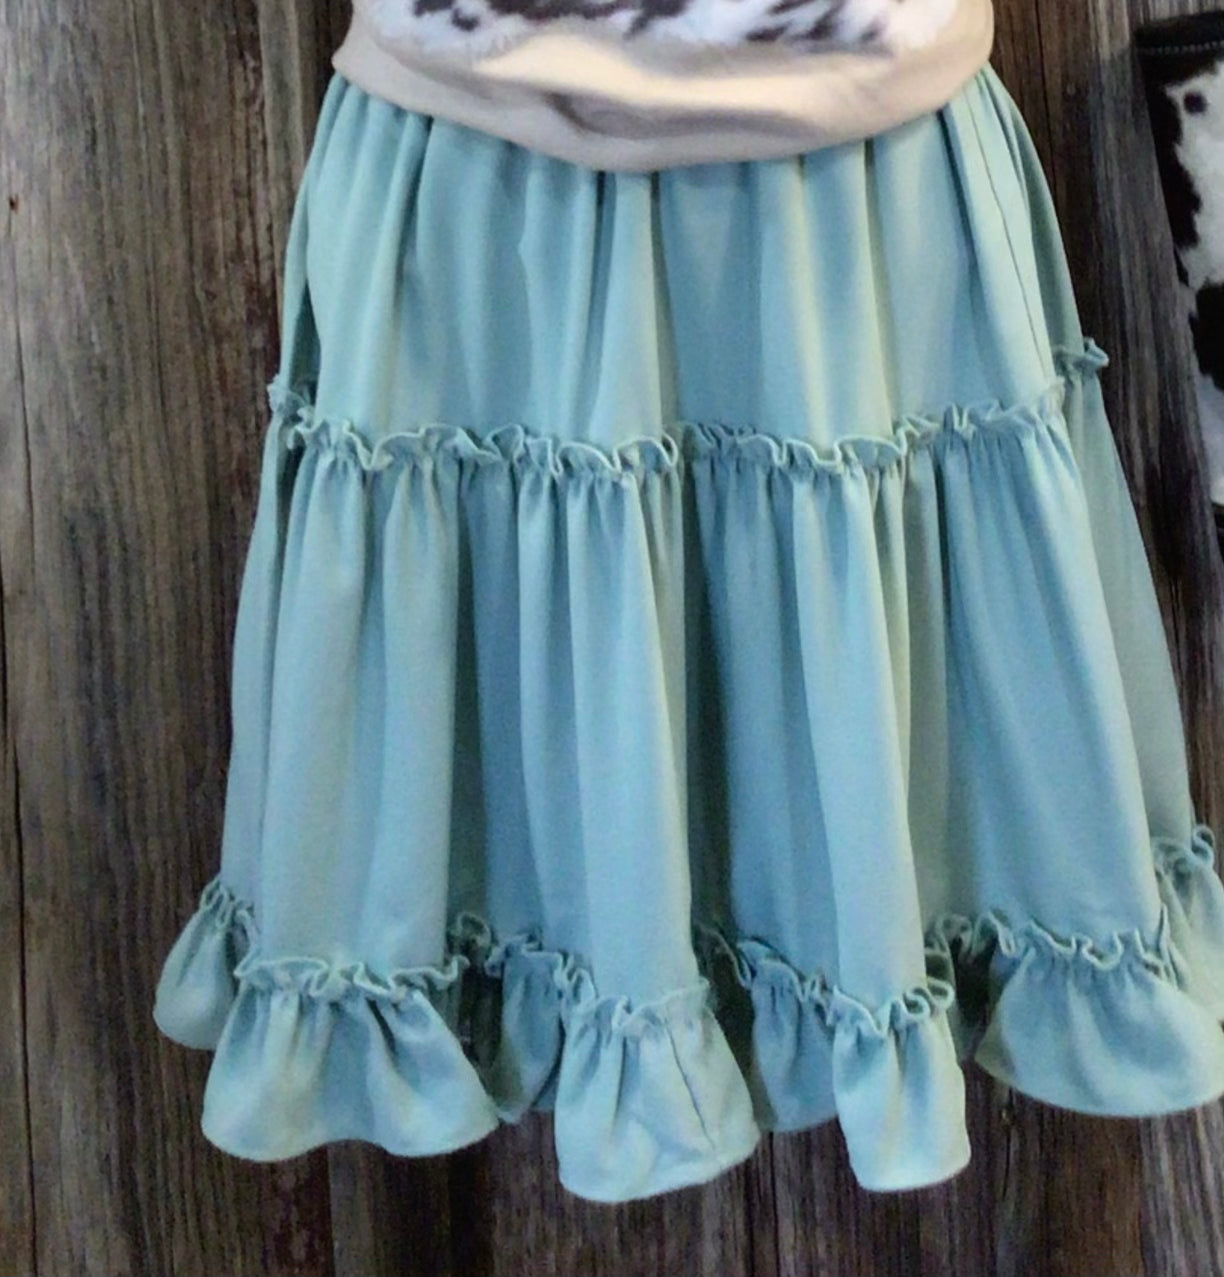 Soft Woven Ruffle Mini Skirt with Elastic Waistband, Dusty Green